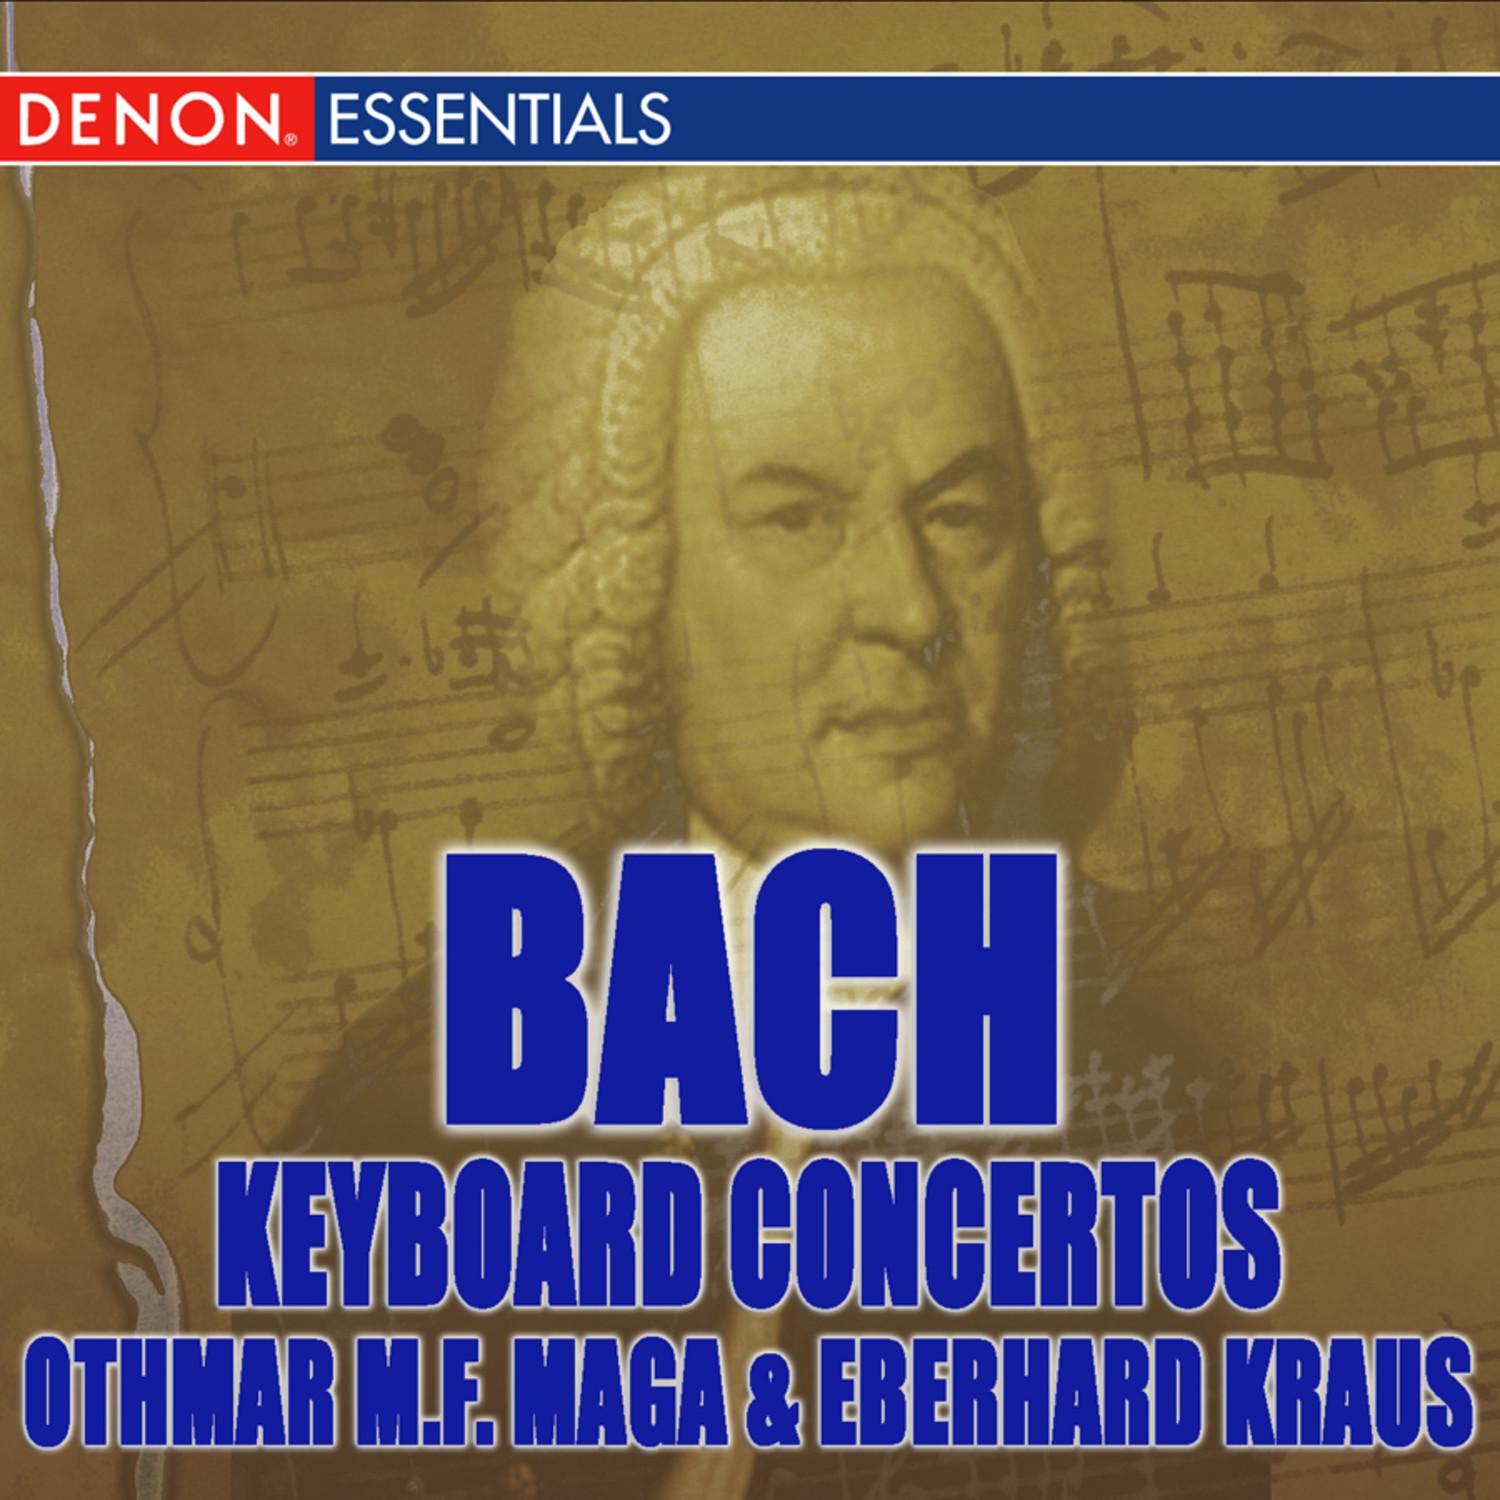 Concerto VIII forr Harpsichord, Strings and Basso Continuo in D Minor, BWV 1059: III. Presto